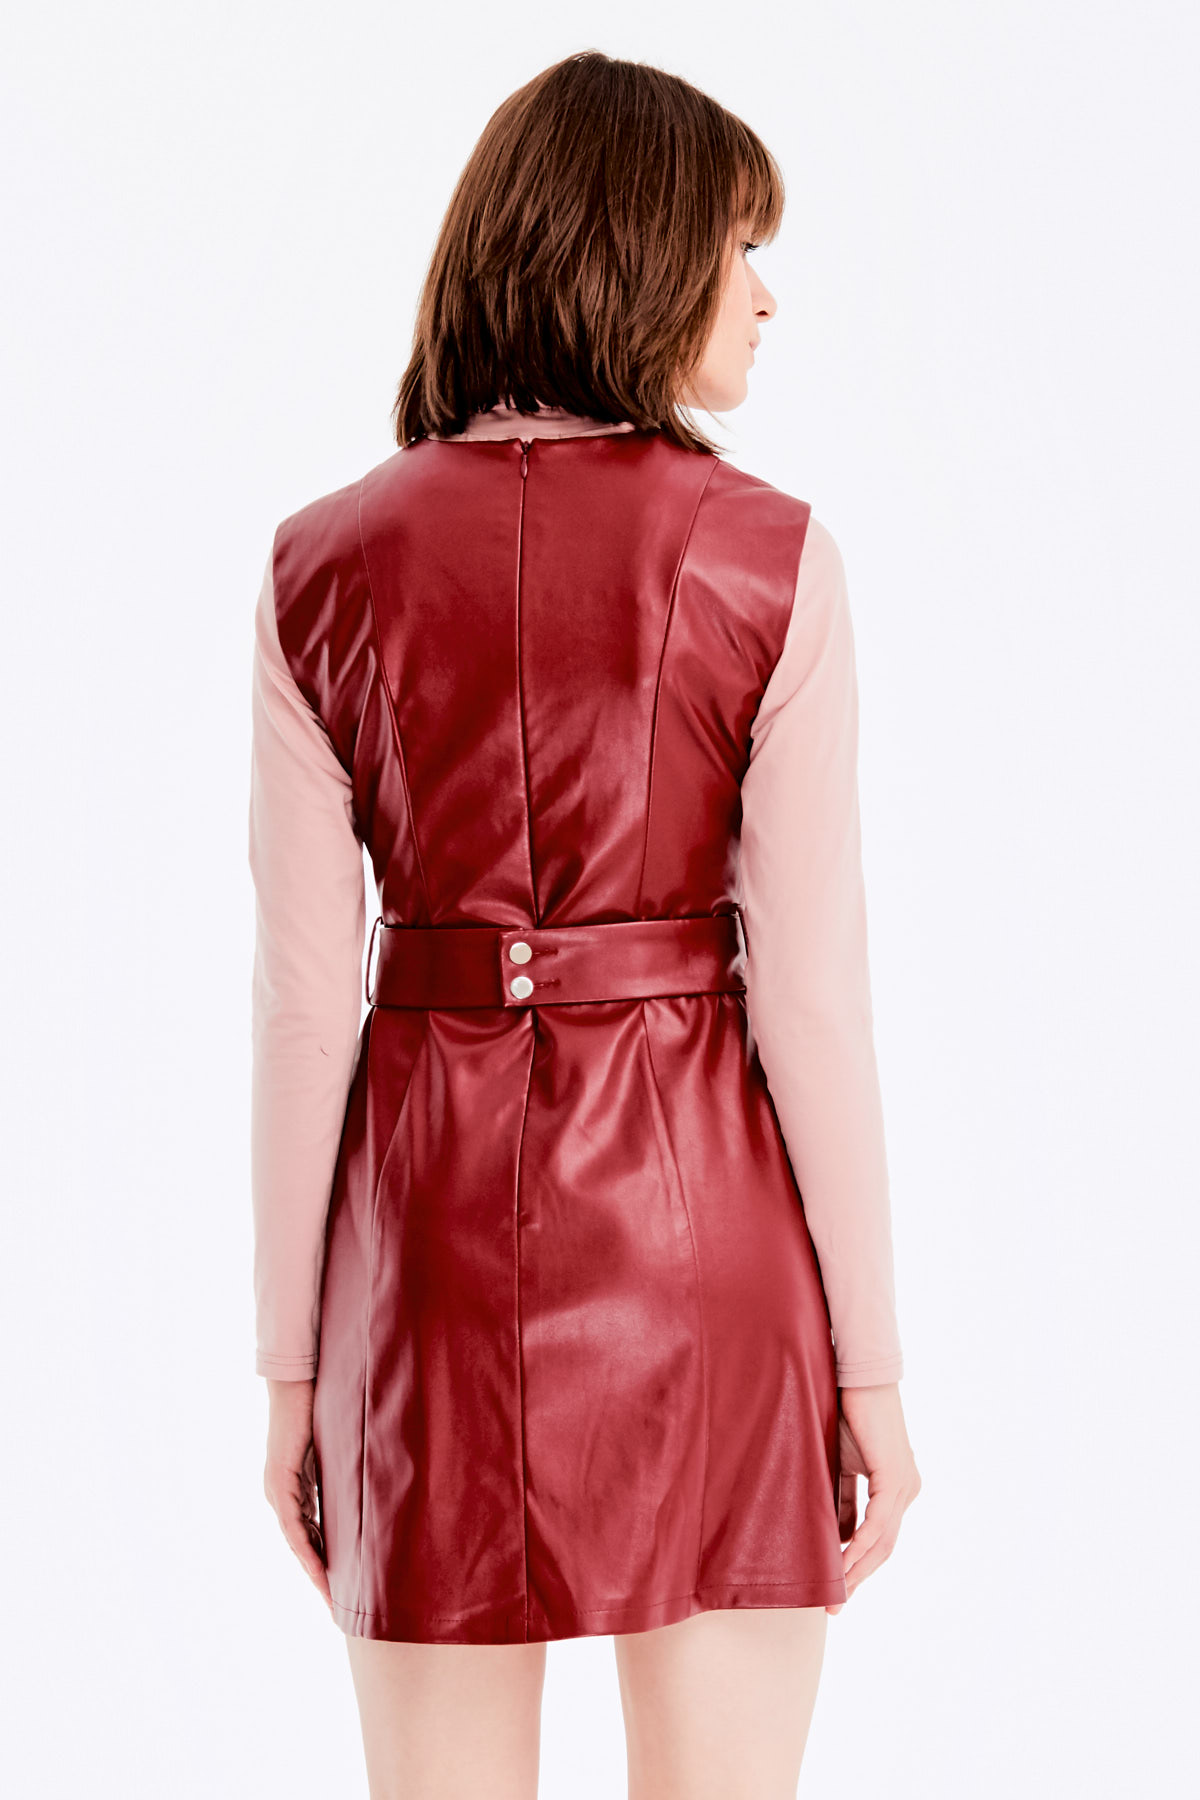 Below-knee burgundy leather dress , photo 6